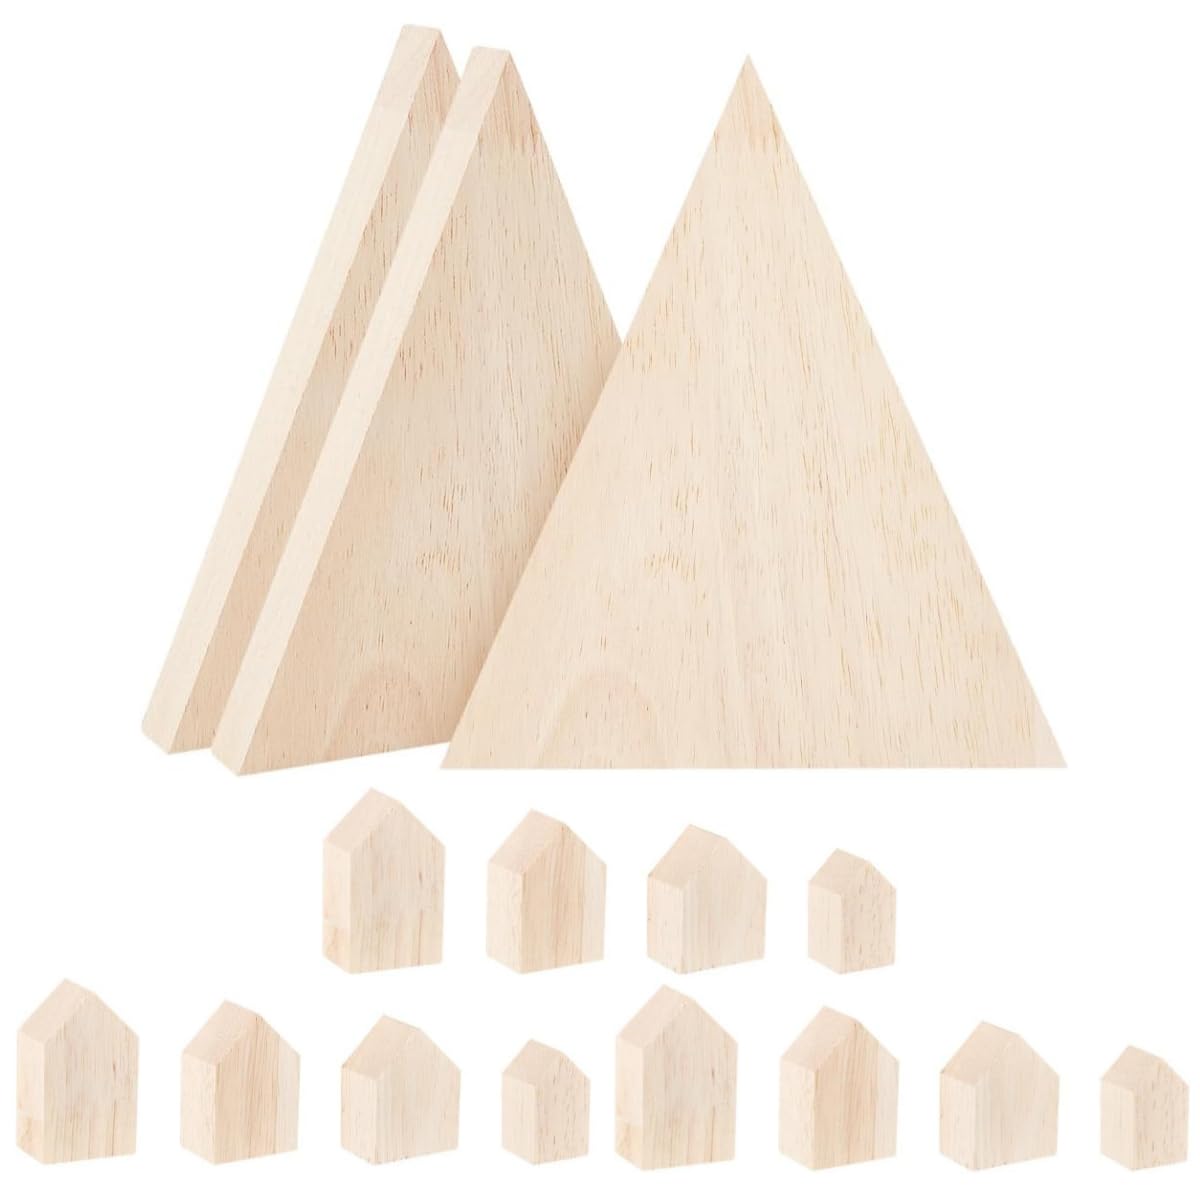 OLYCRAFT 12Pcs 4Sizes Unfinished Wooden House Shaped Blocks & 3Pcs 7x6 Inch Unfinished Wooden Triangle Shaped Blocks Wooden Tray Plates Blank Wooden